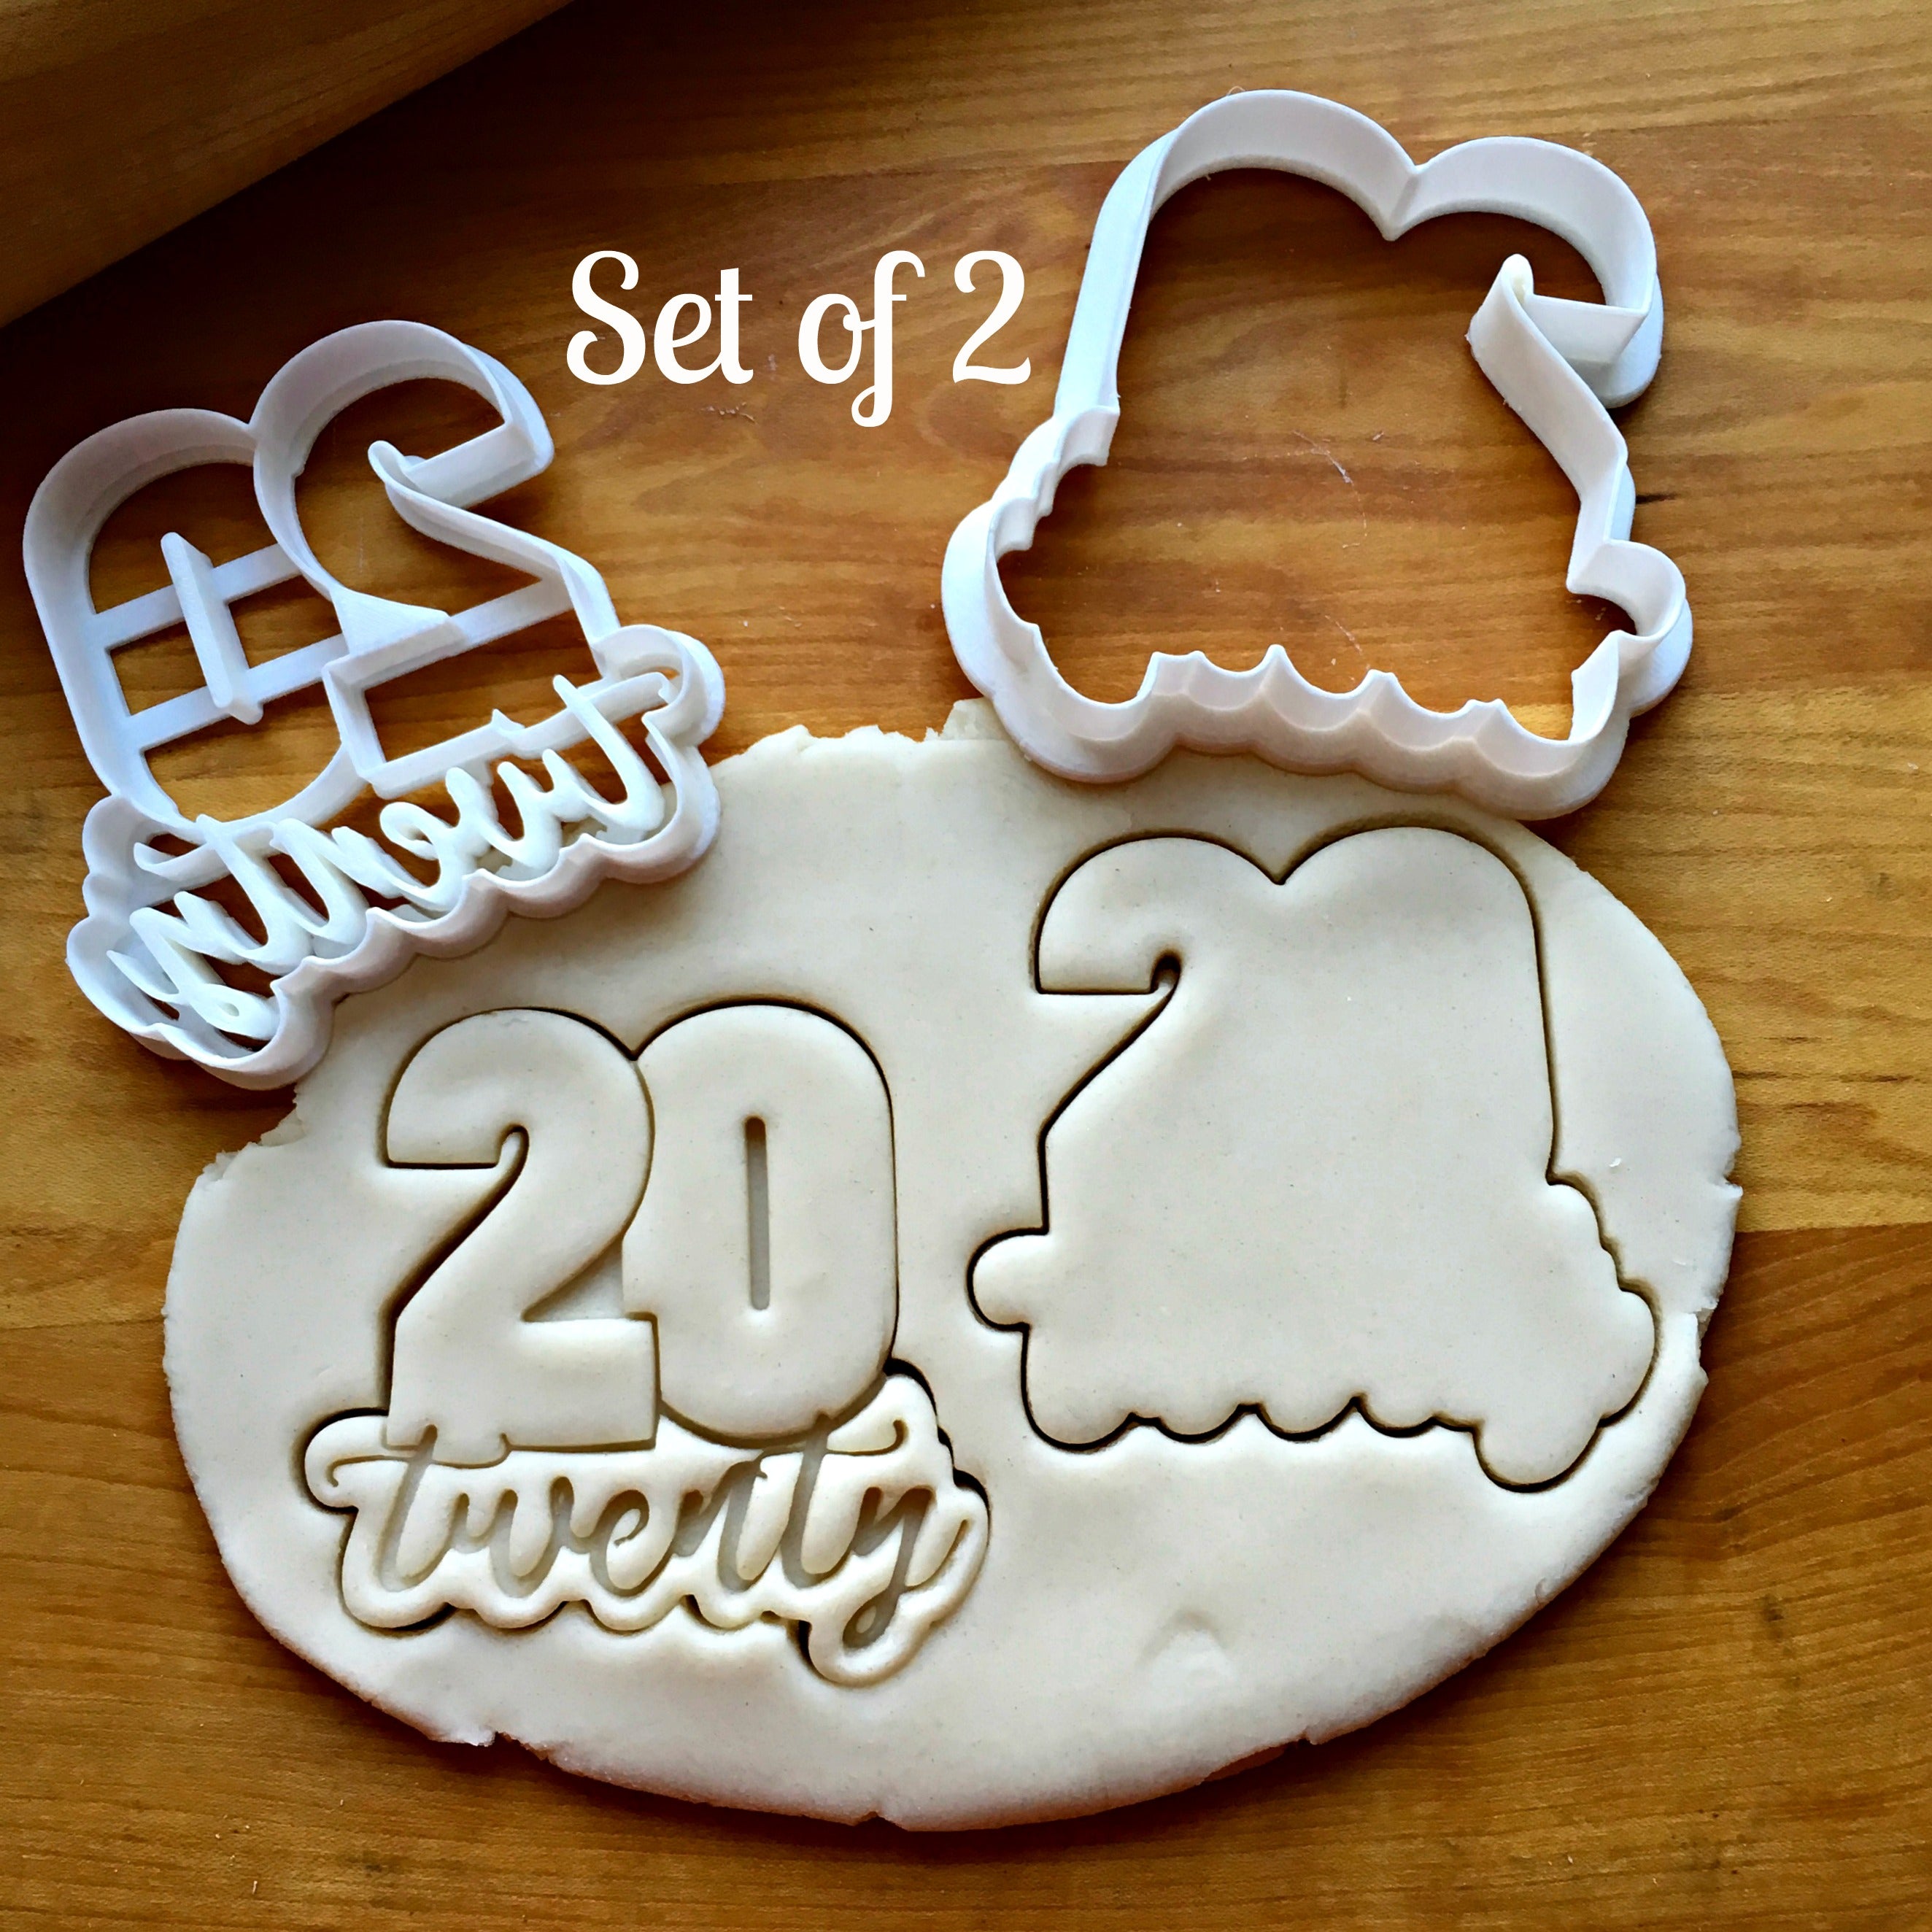 Set of 2 Lettered Number 20 Cookie Cutters/Dishwasher Safe